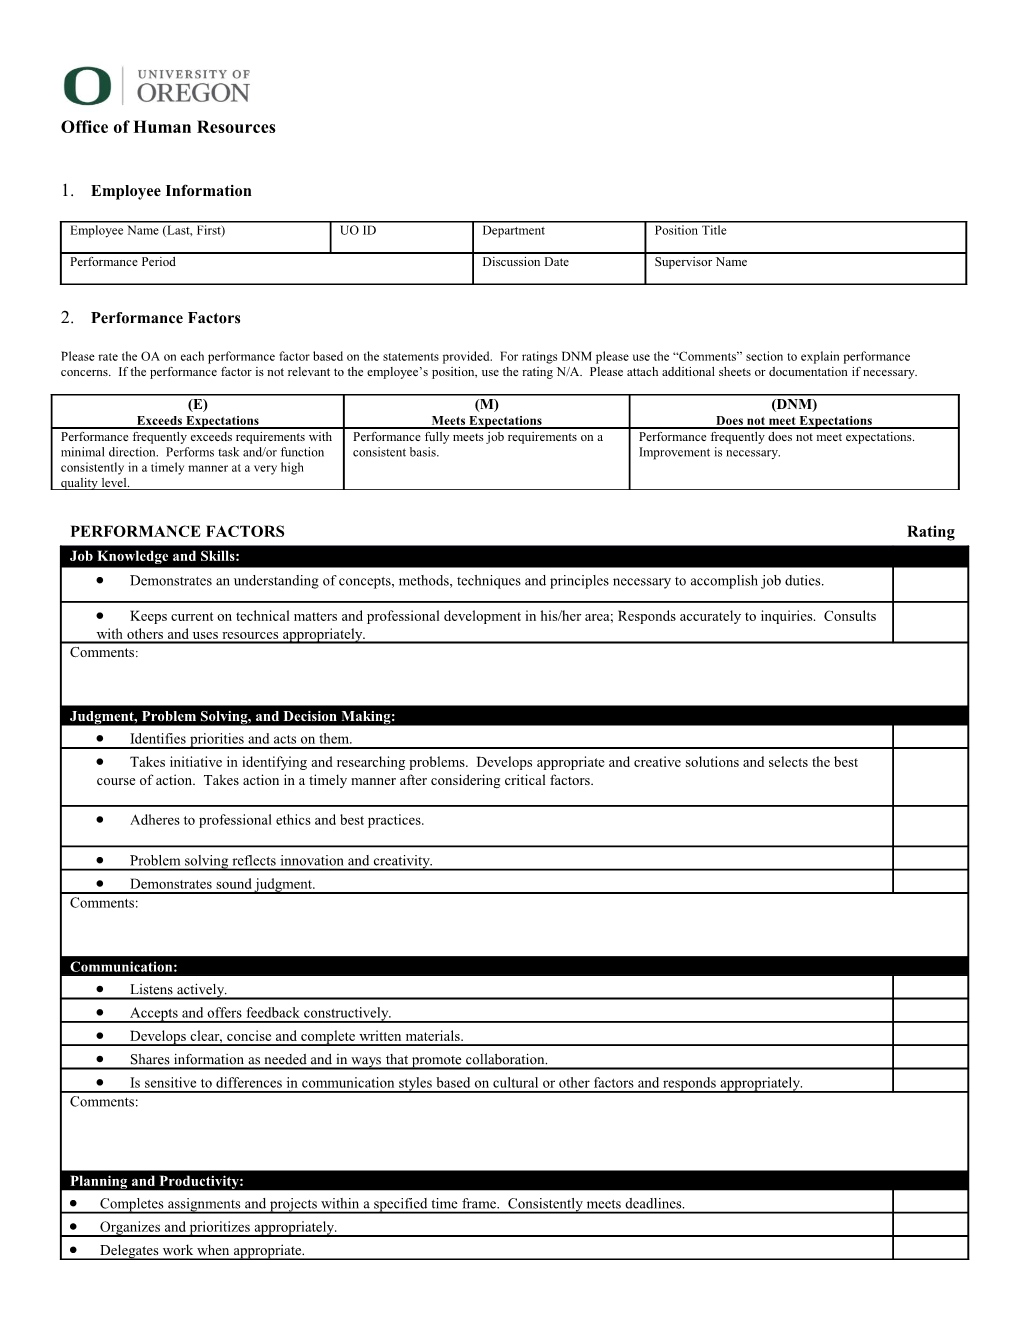 OA Performance Evaluation Form